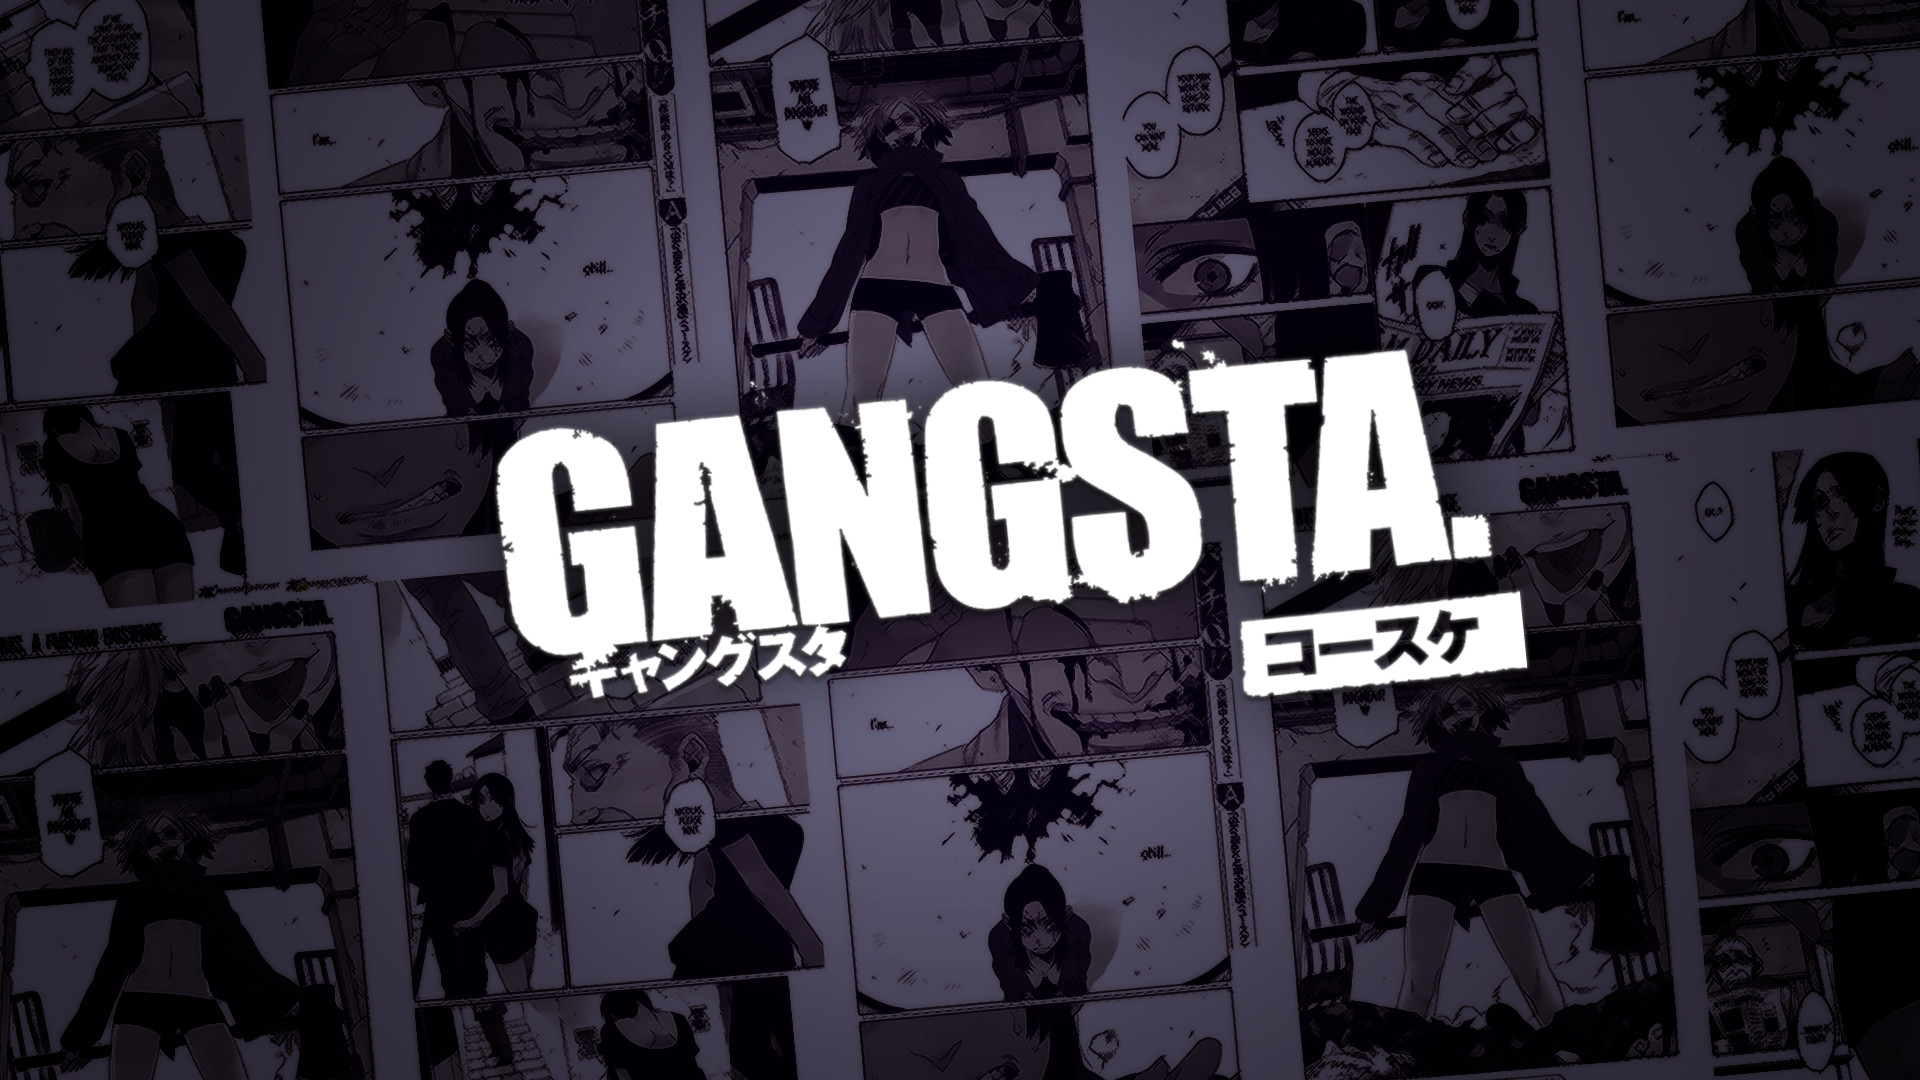 500 Gangster Pictures HD  Download Free Images on Unsplash